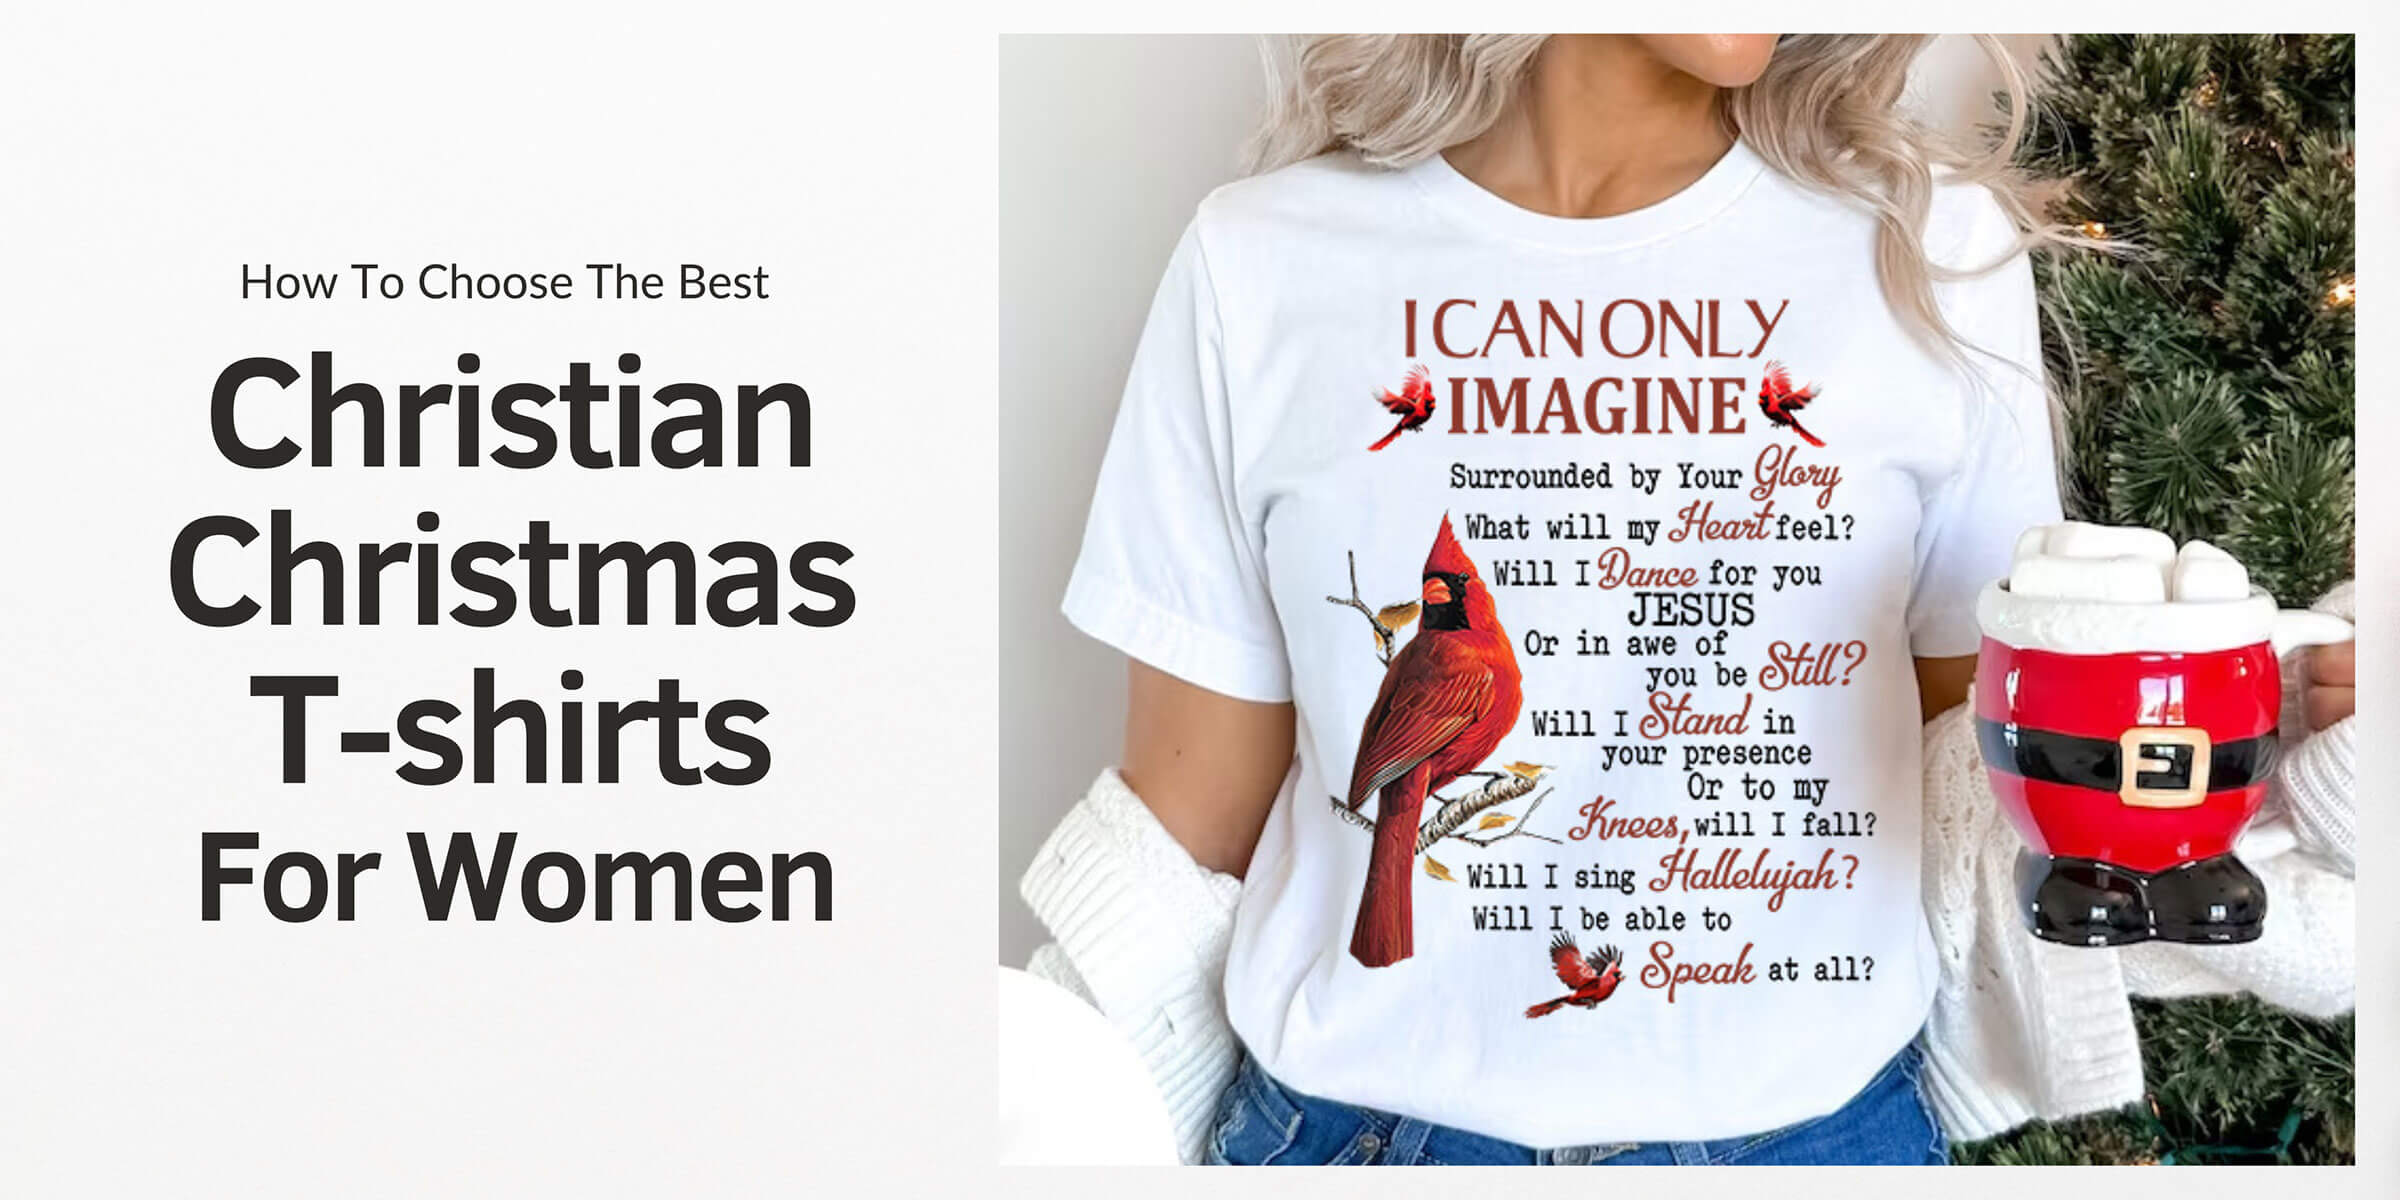 Christian Christmas T-shirts For Women